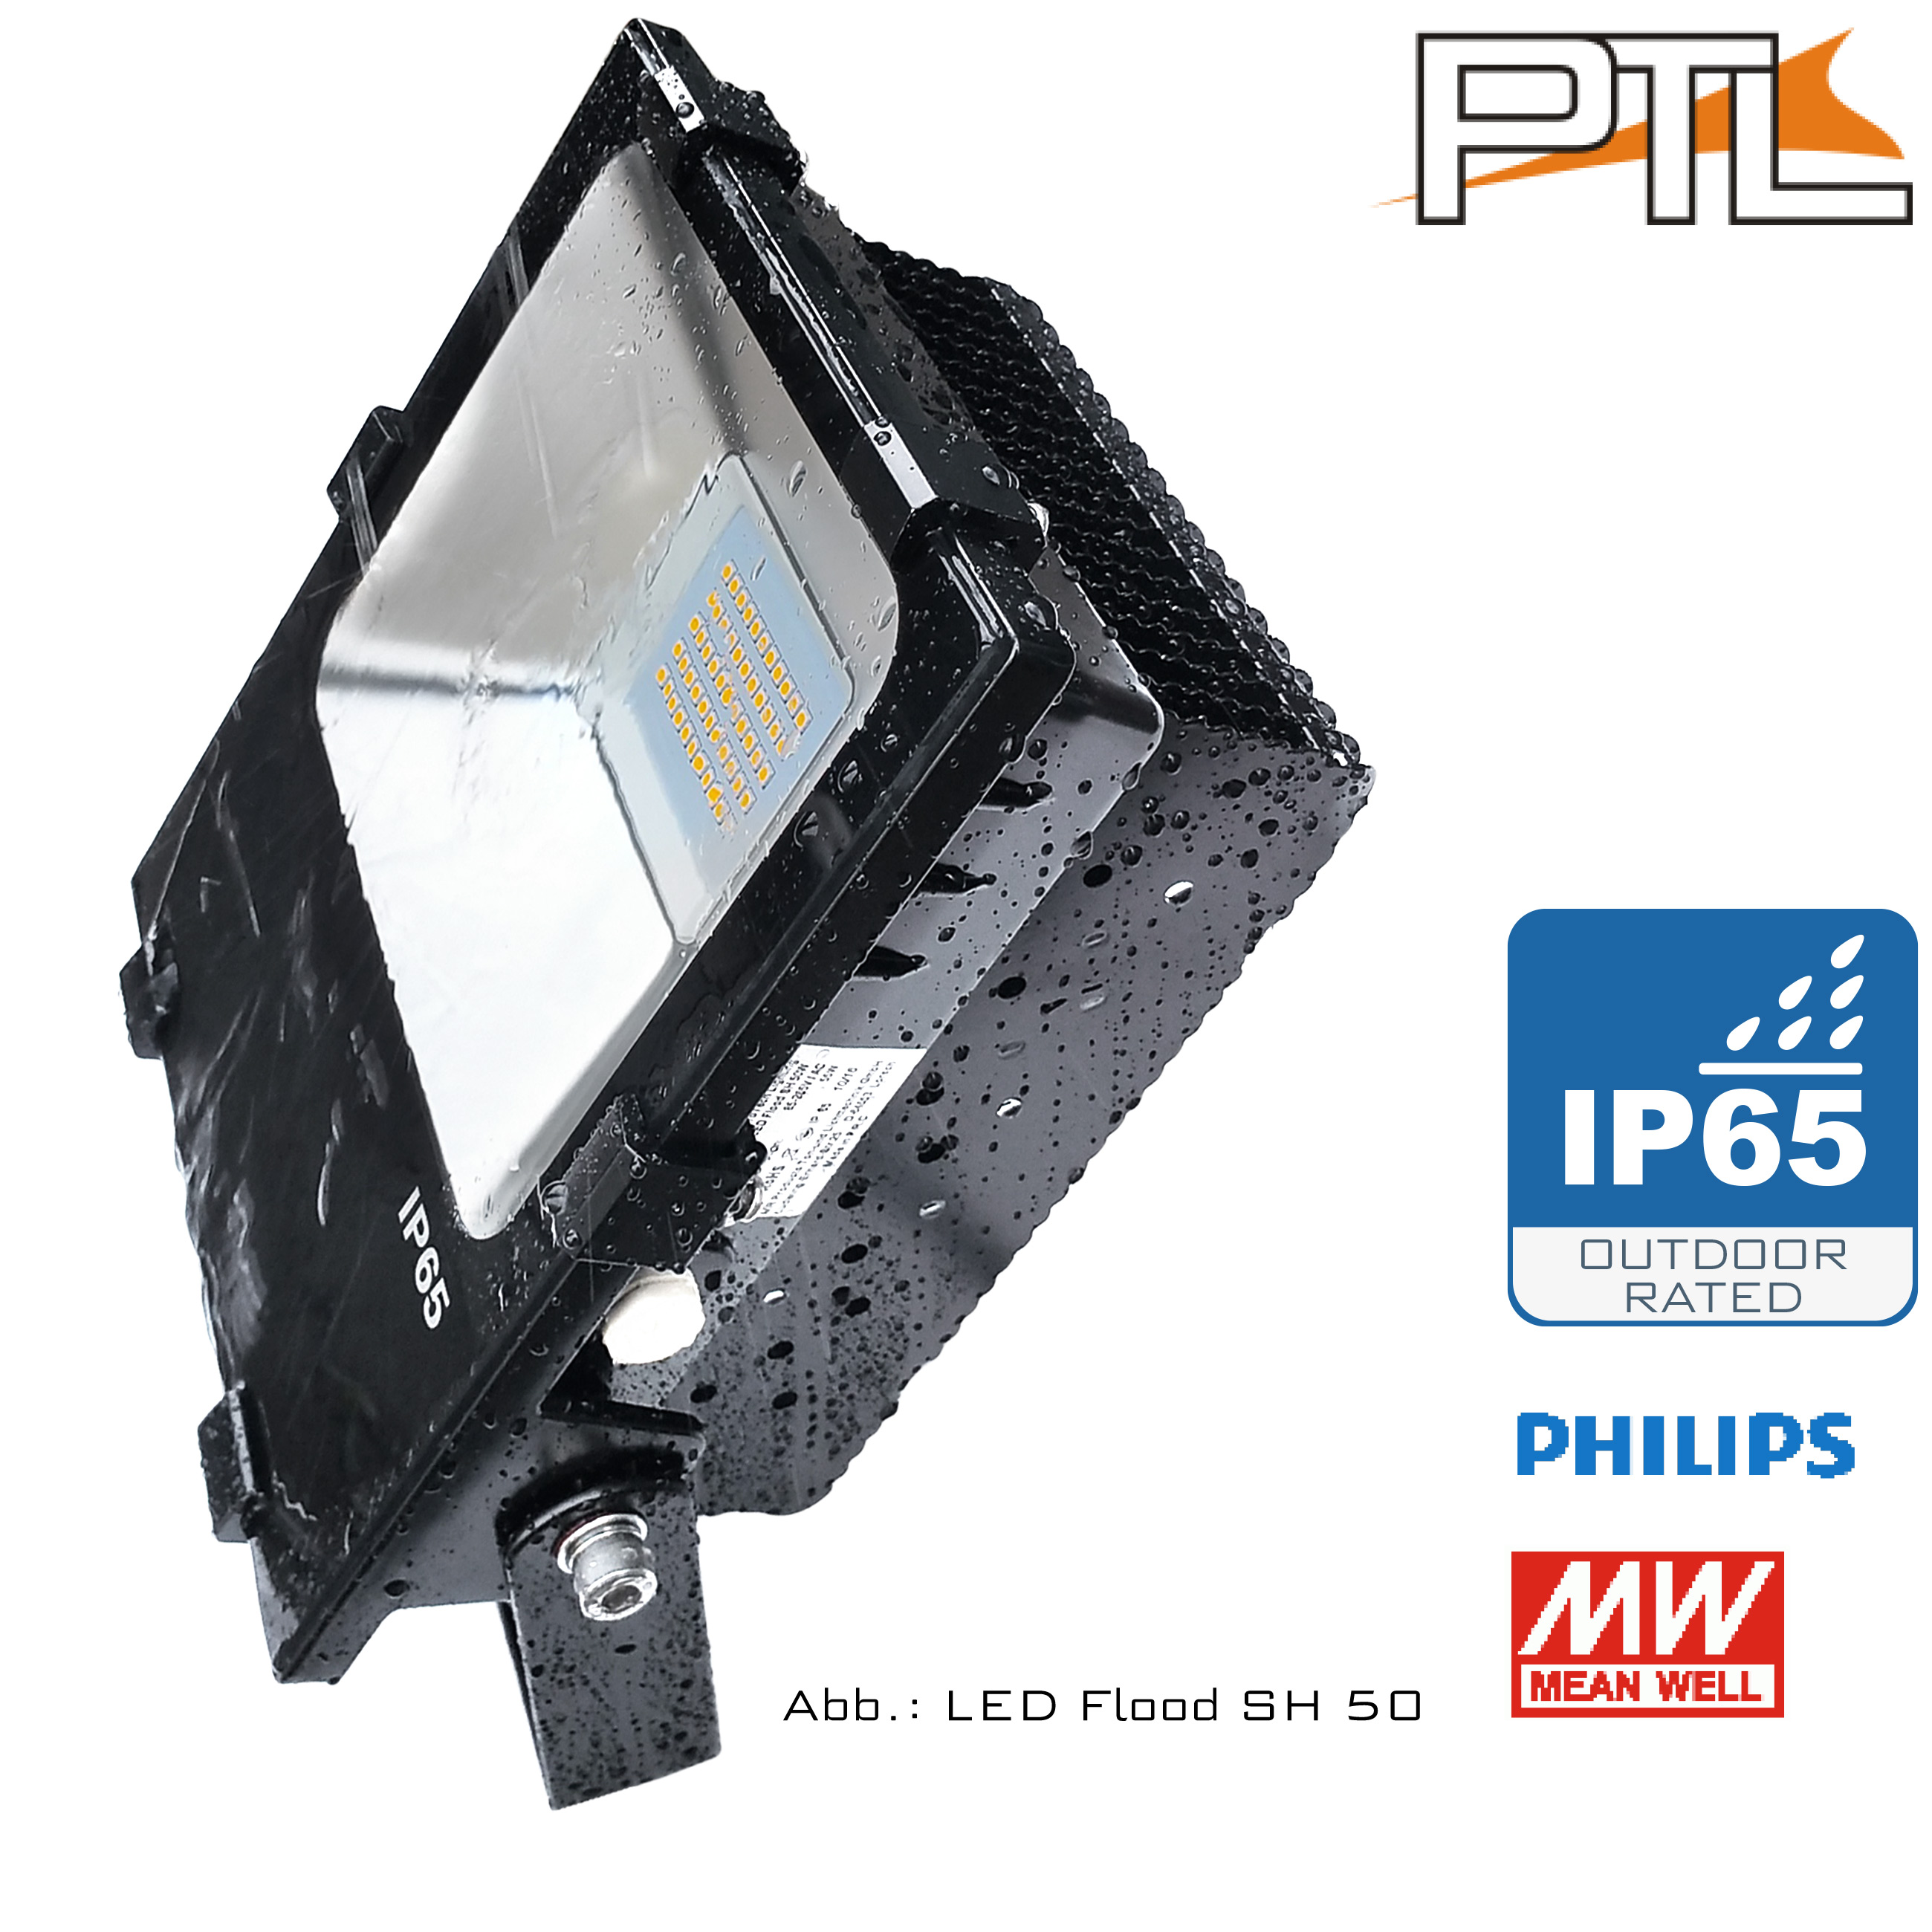 PTL LED Flood SH 10W kalt weiß LED Fluter IP65